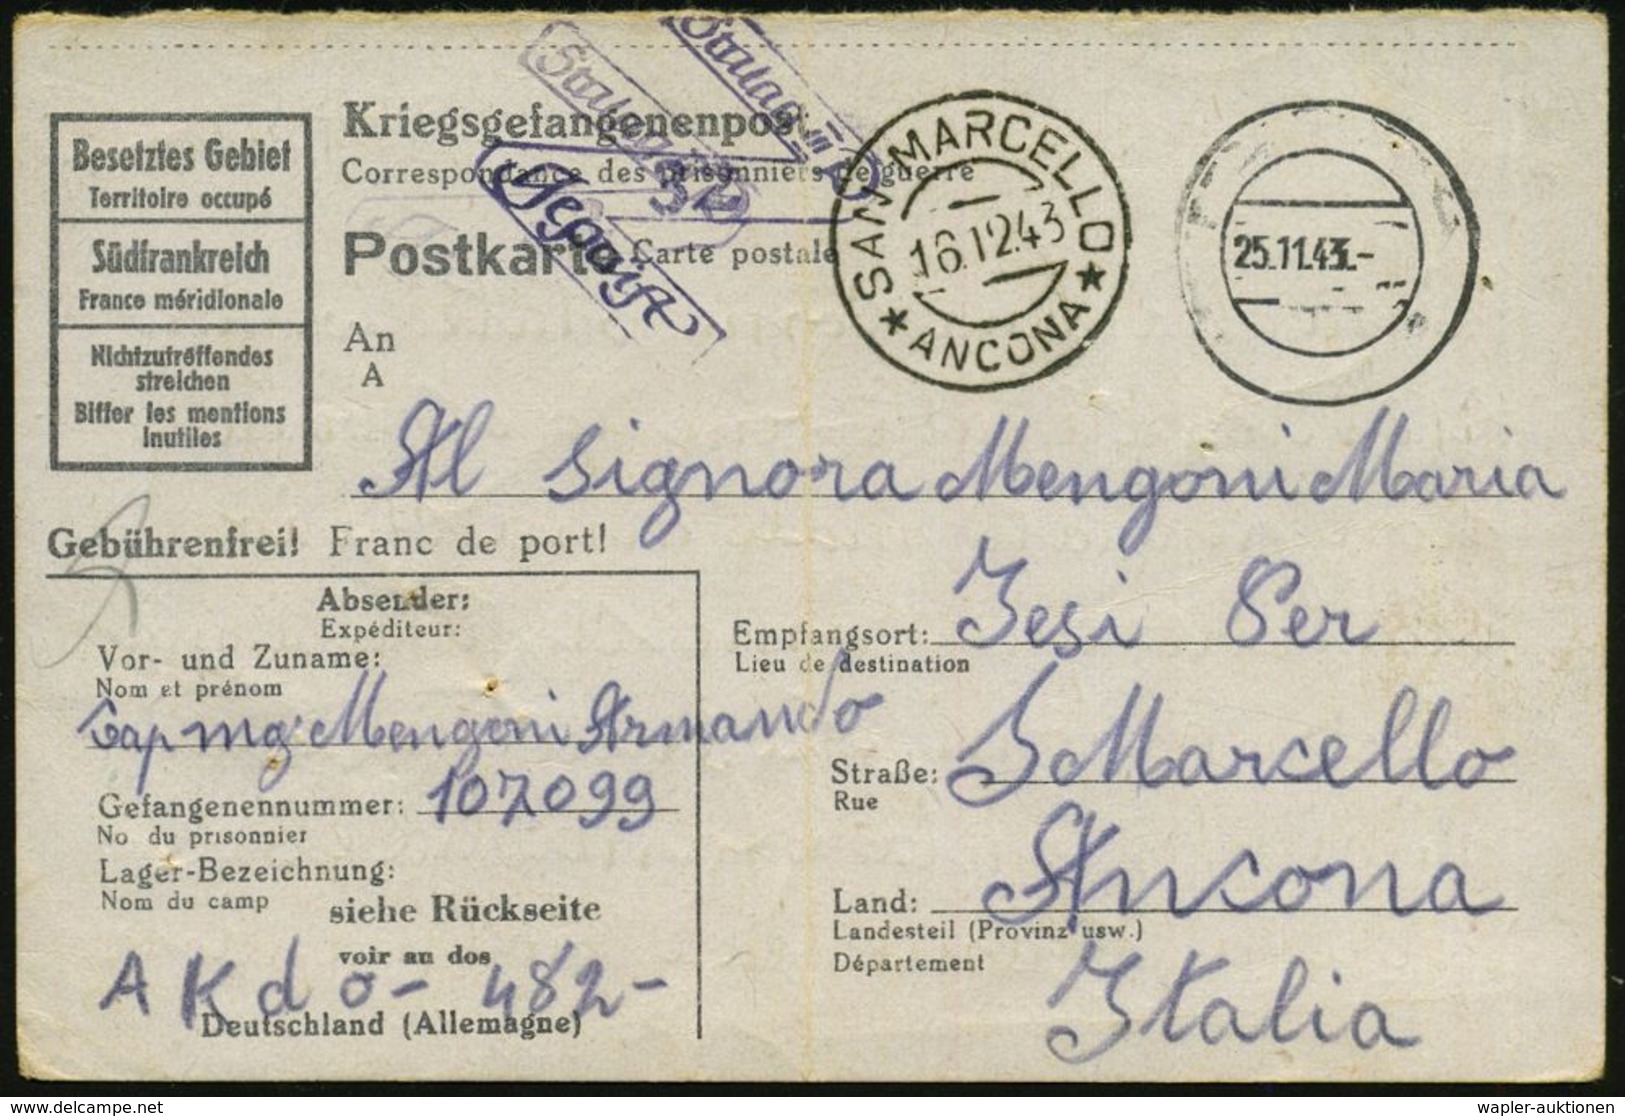 Berlin-Lichterfelde 1943 (25.11.) Stummer 2K-Steg = Tarnstempel Bln-Lichterfelde Süd + Viol. Ra.: Geprüft + Viol. Ra.: S - Rode Kruis